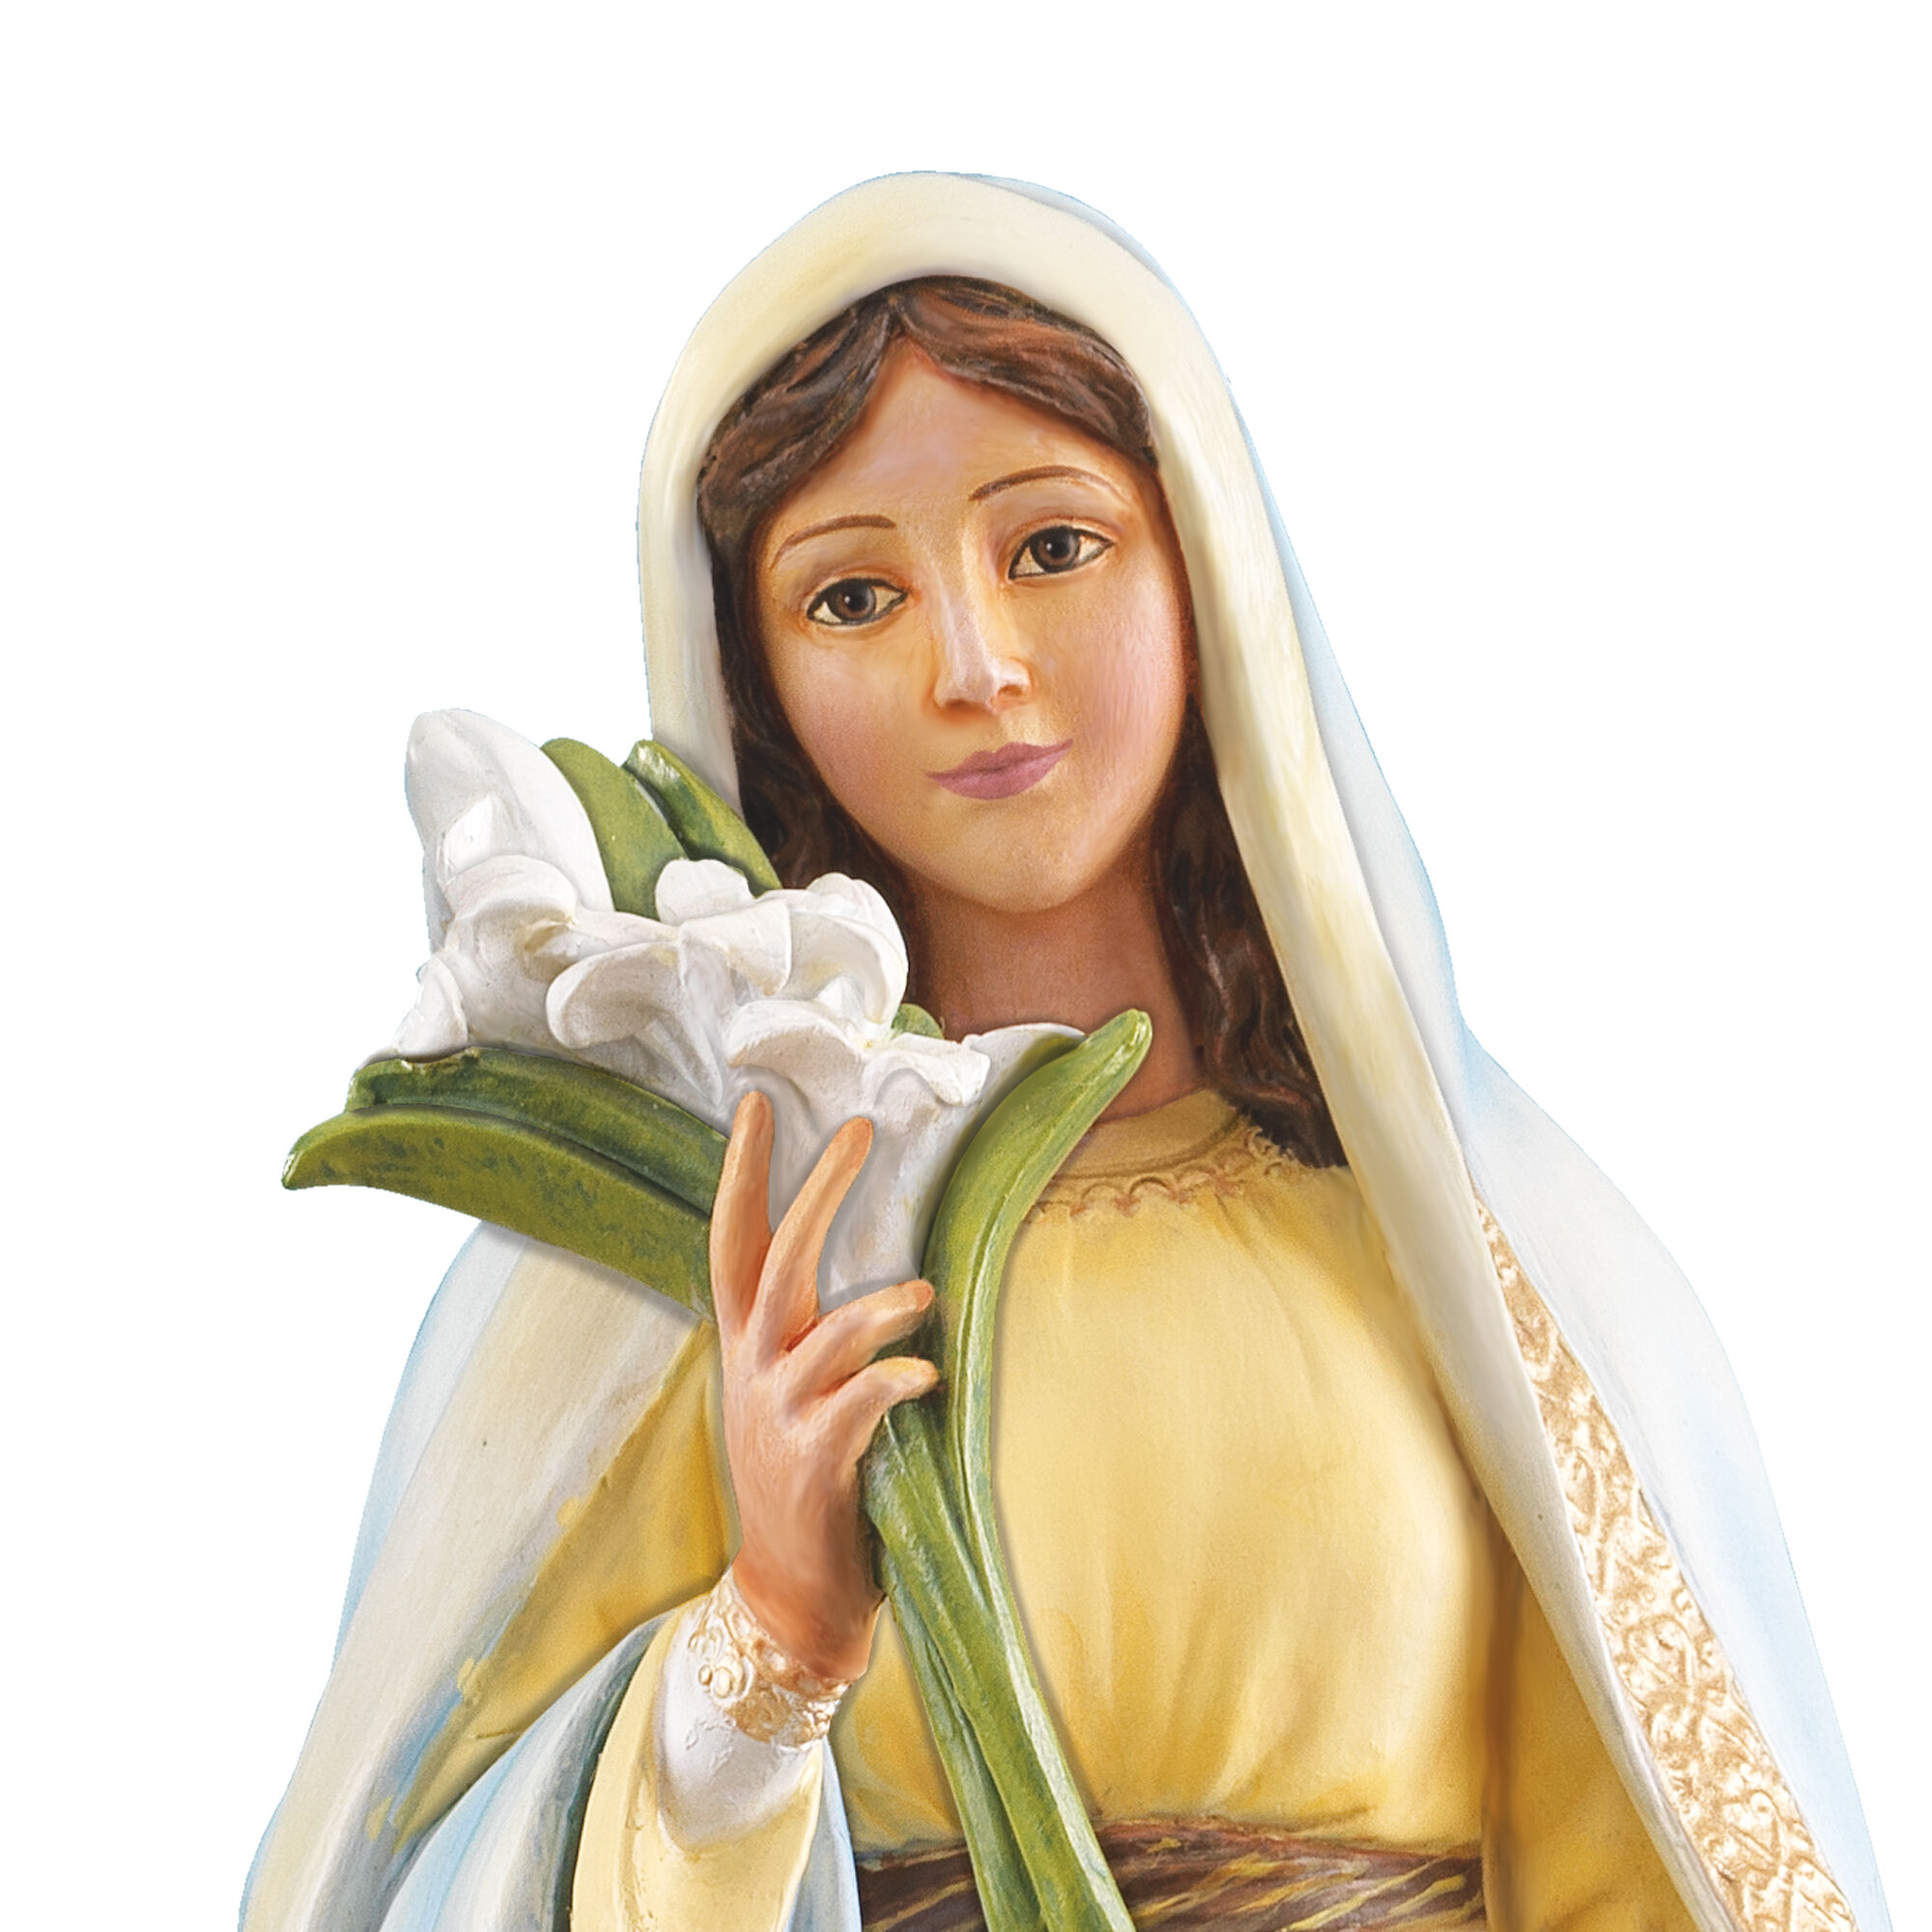 Hail Mary Full of Grace Figurine 6295 0019 b detail